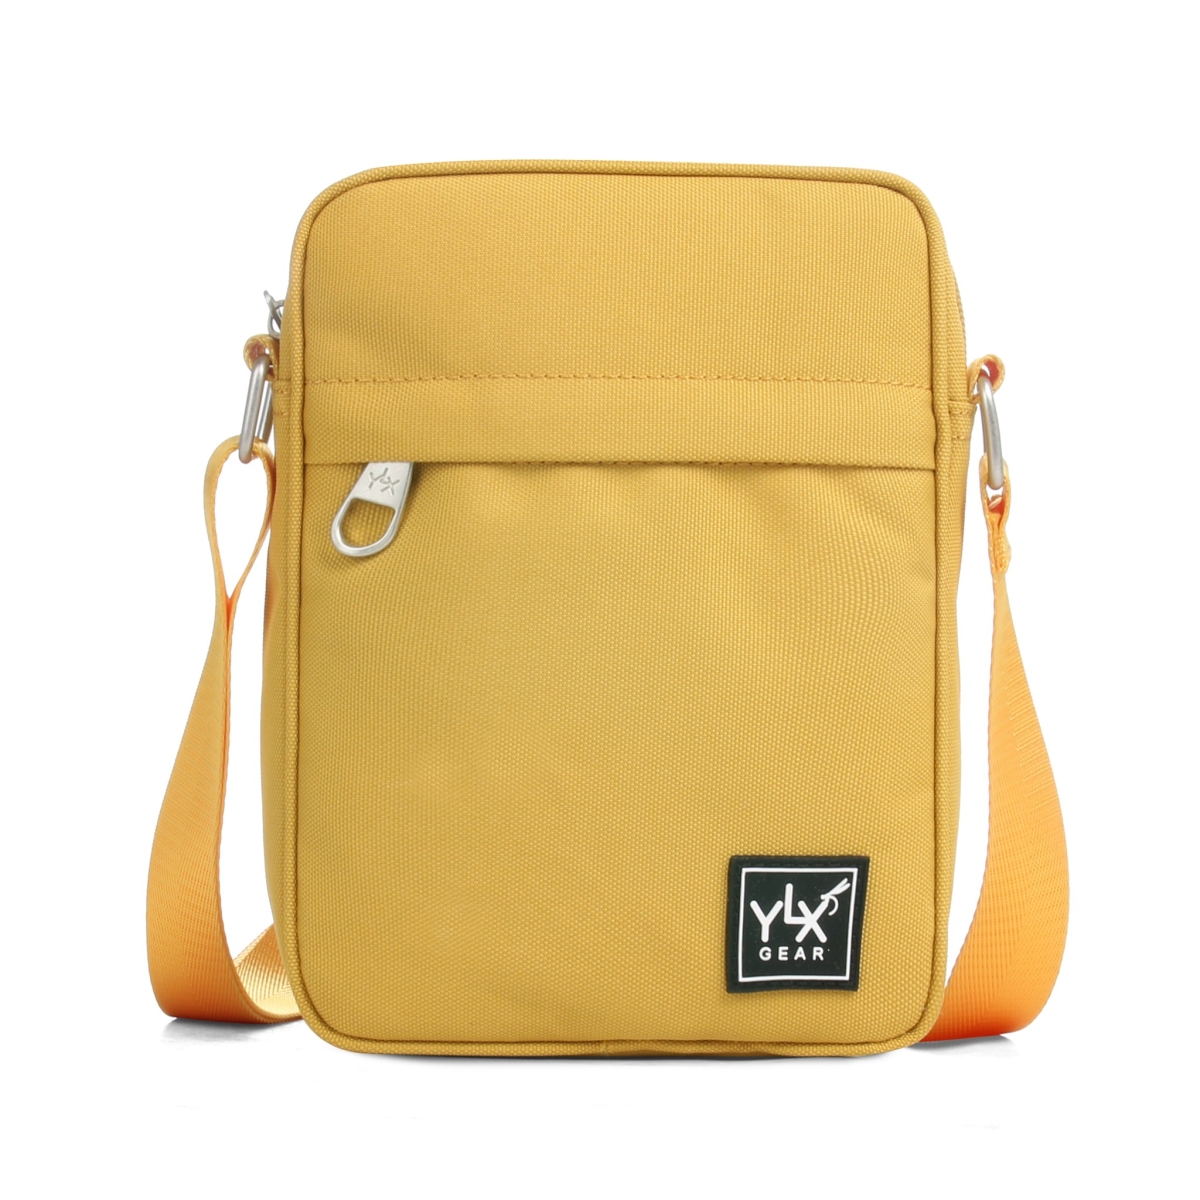 YLX Beech Crossbody Bag | Yellow Ochre